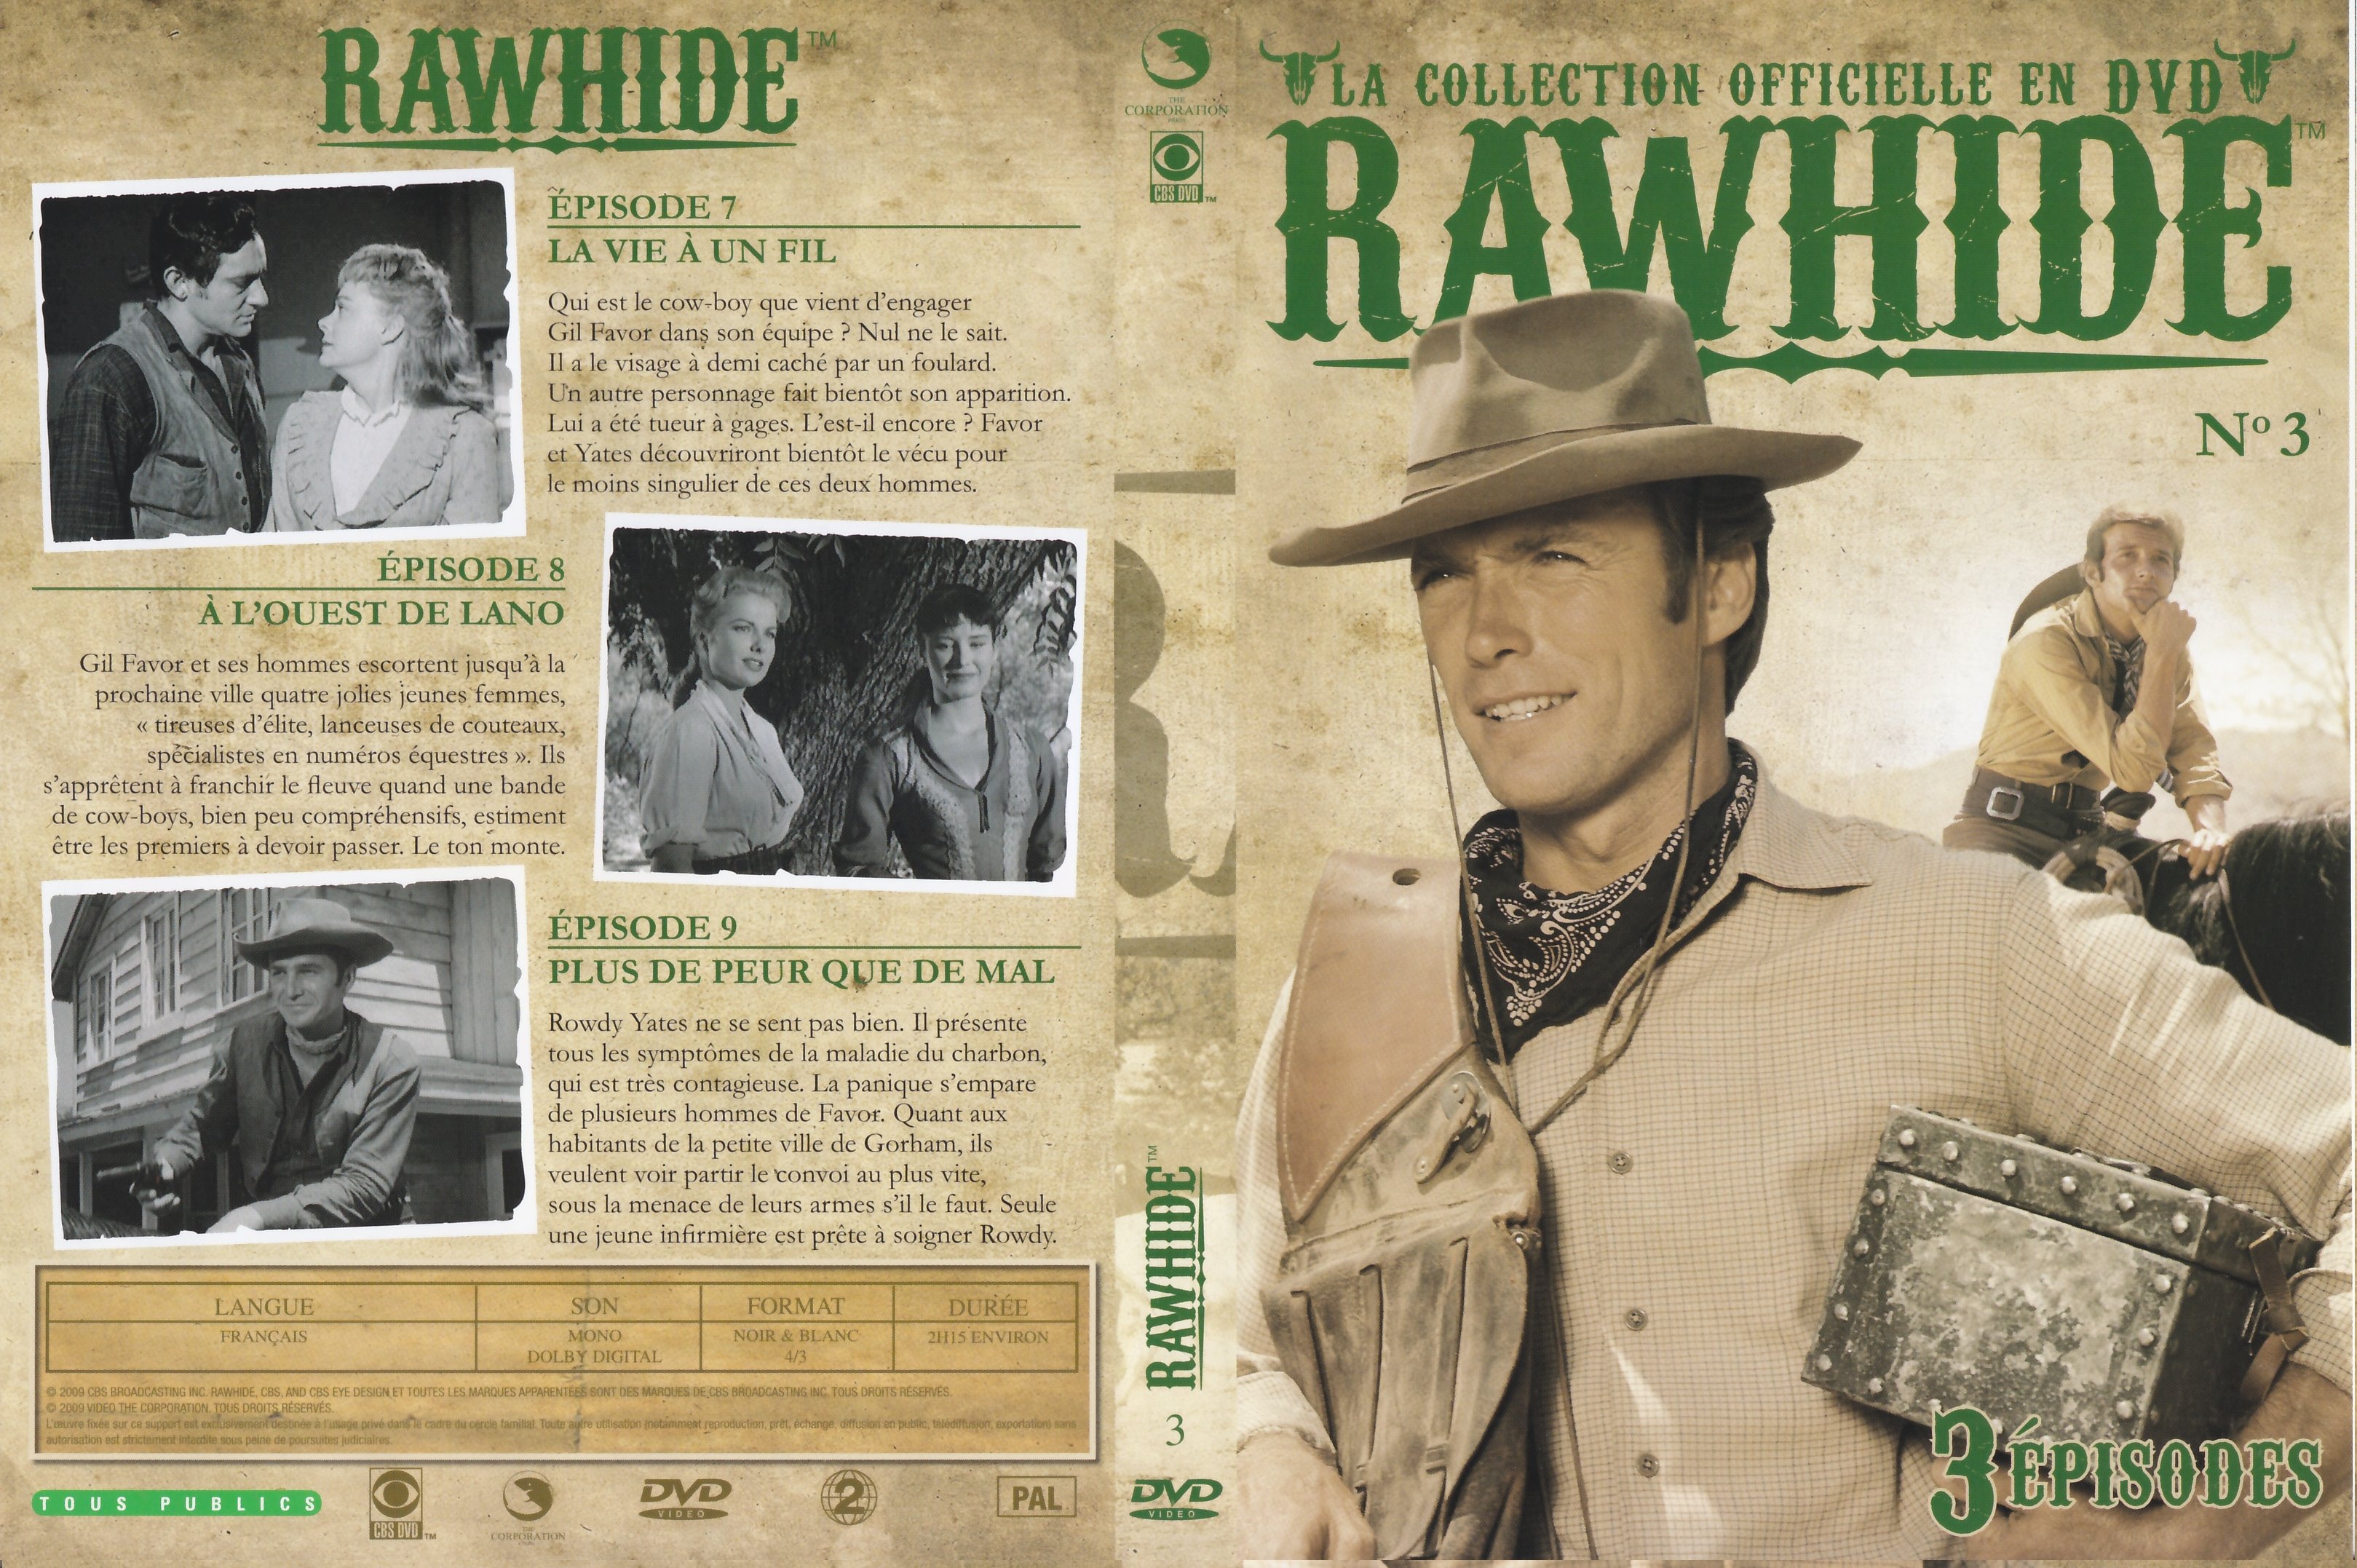 Jaquette DVD Rawhide DVD 03